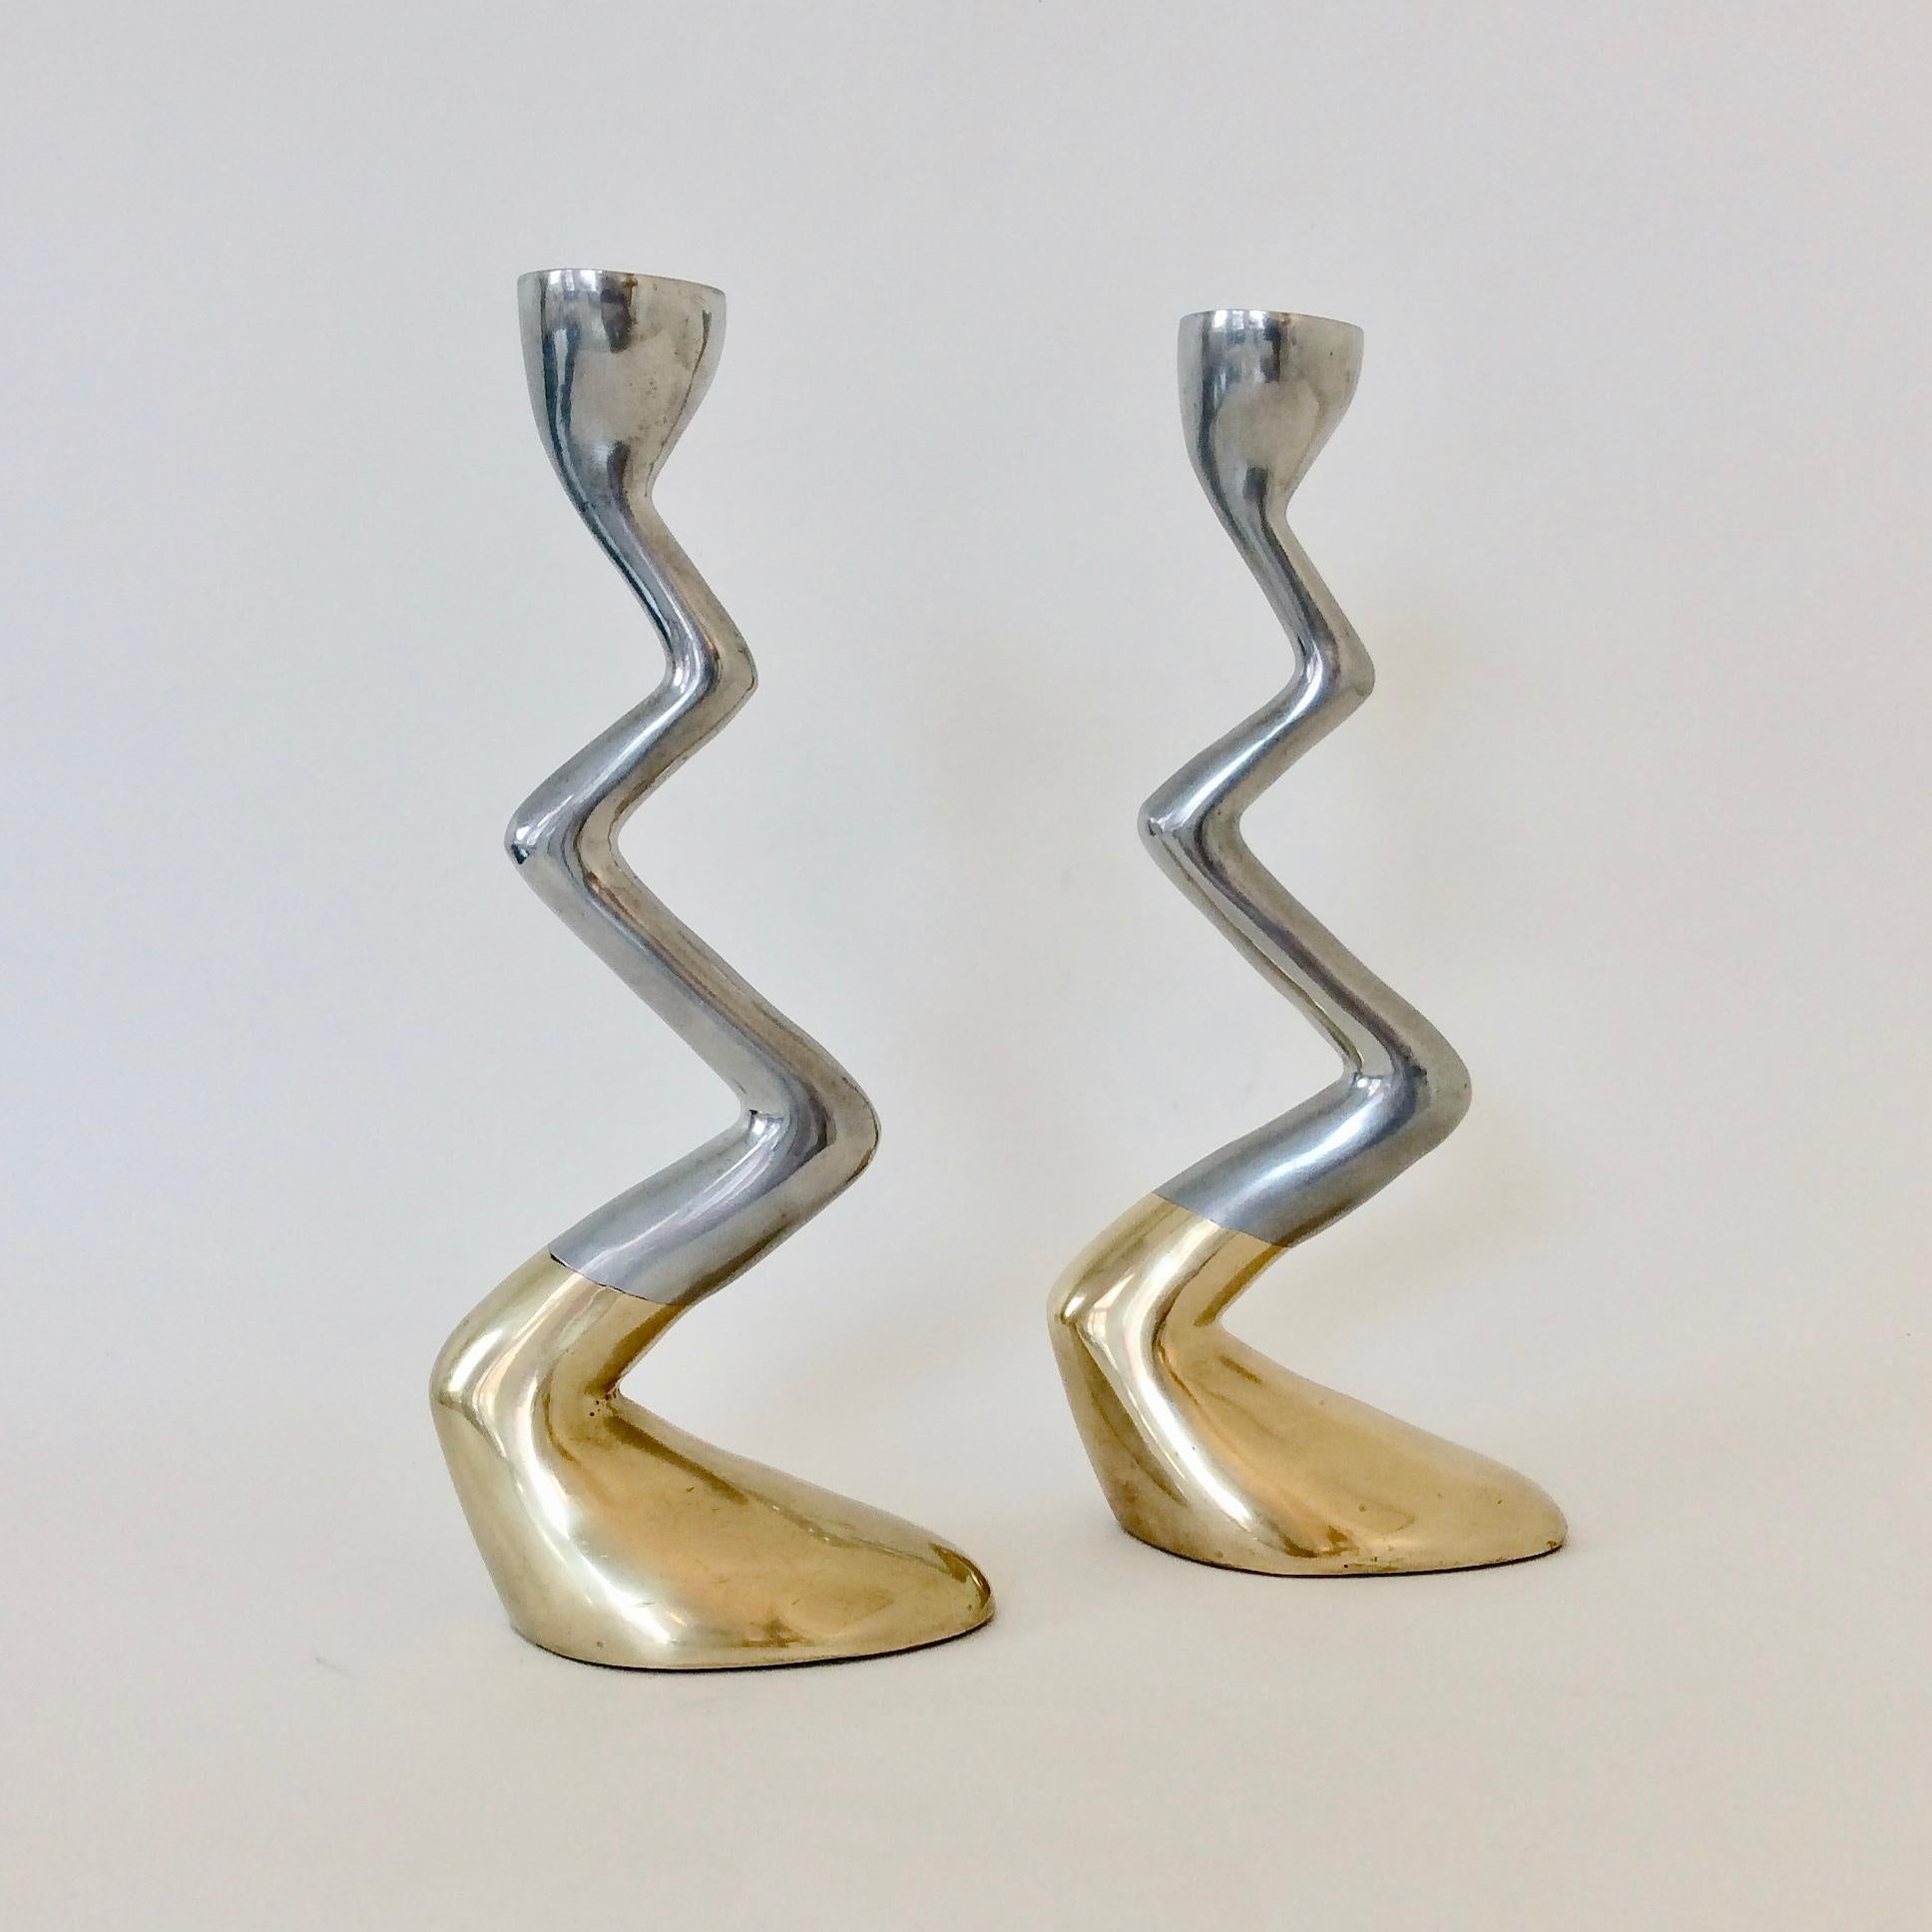 Nice pair of David Marshall candlesticks, circa 1970, Spain.
Cast brass and aluminum.
Dimensions: 25 cm H, 11 cm W, 6 cm D.
We ship worldwide
   
   